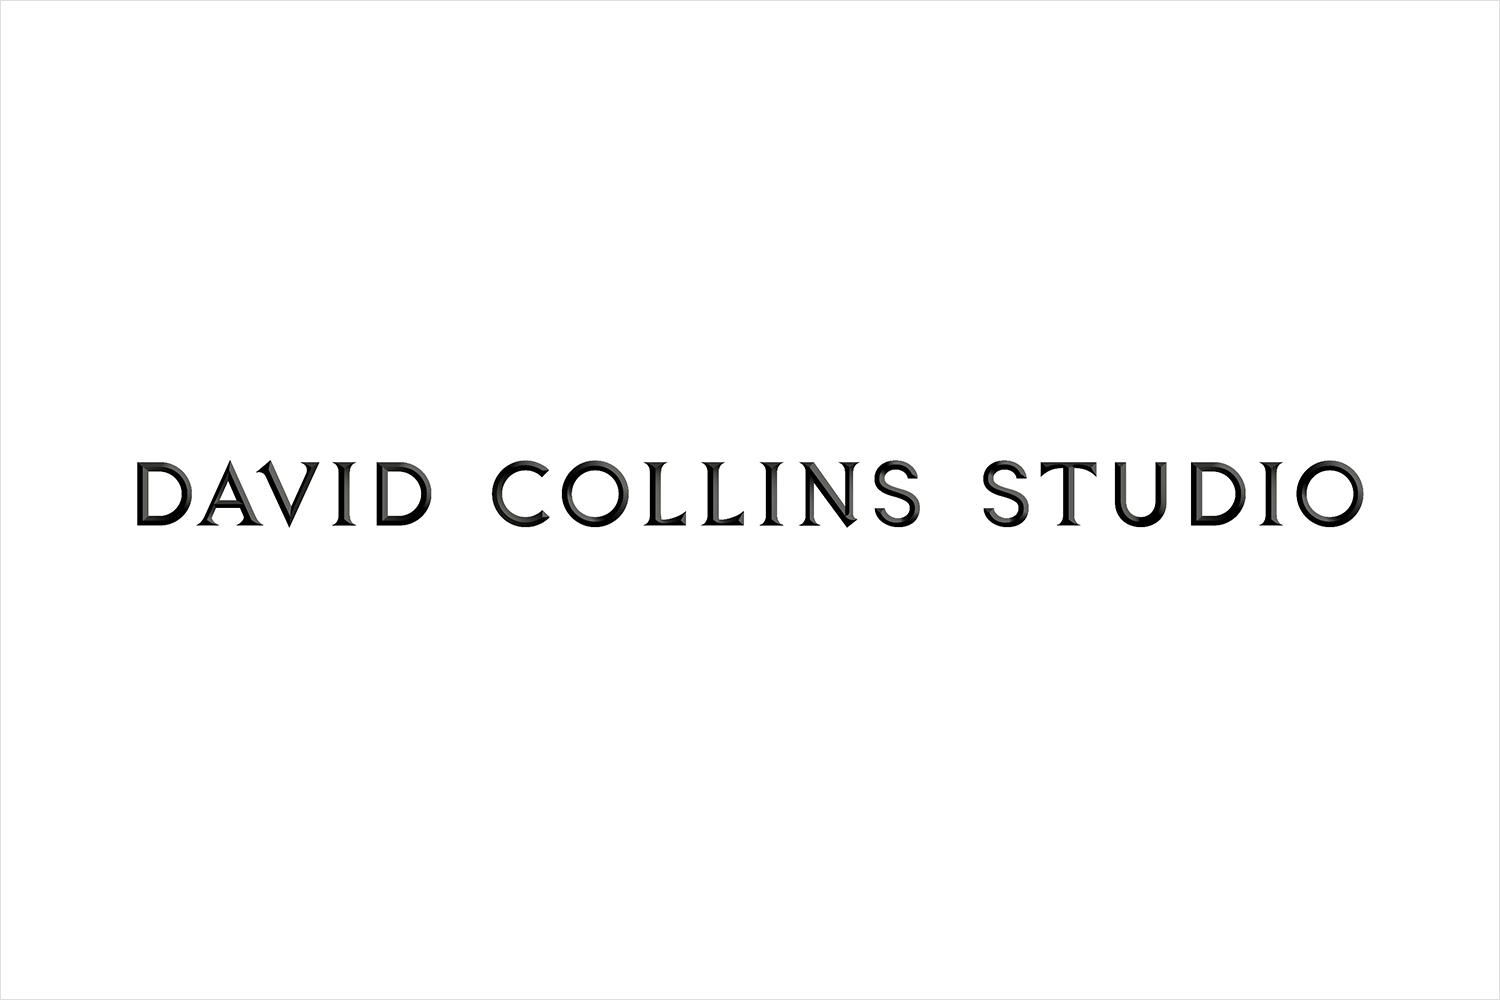 Creative Logotype Gallery & Inspiration: David Collins Studio by Bibliothèque Design